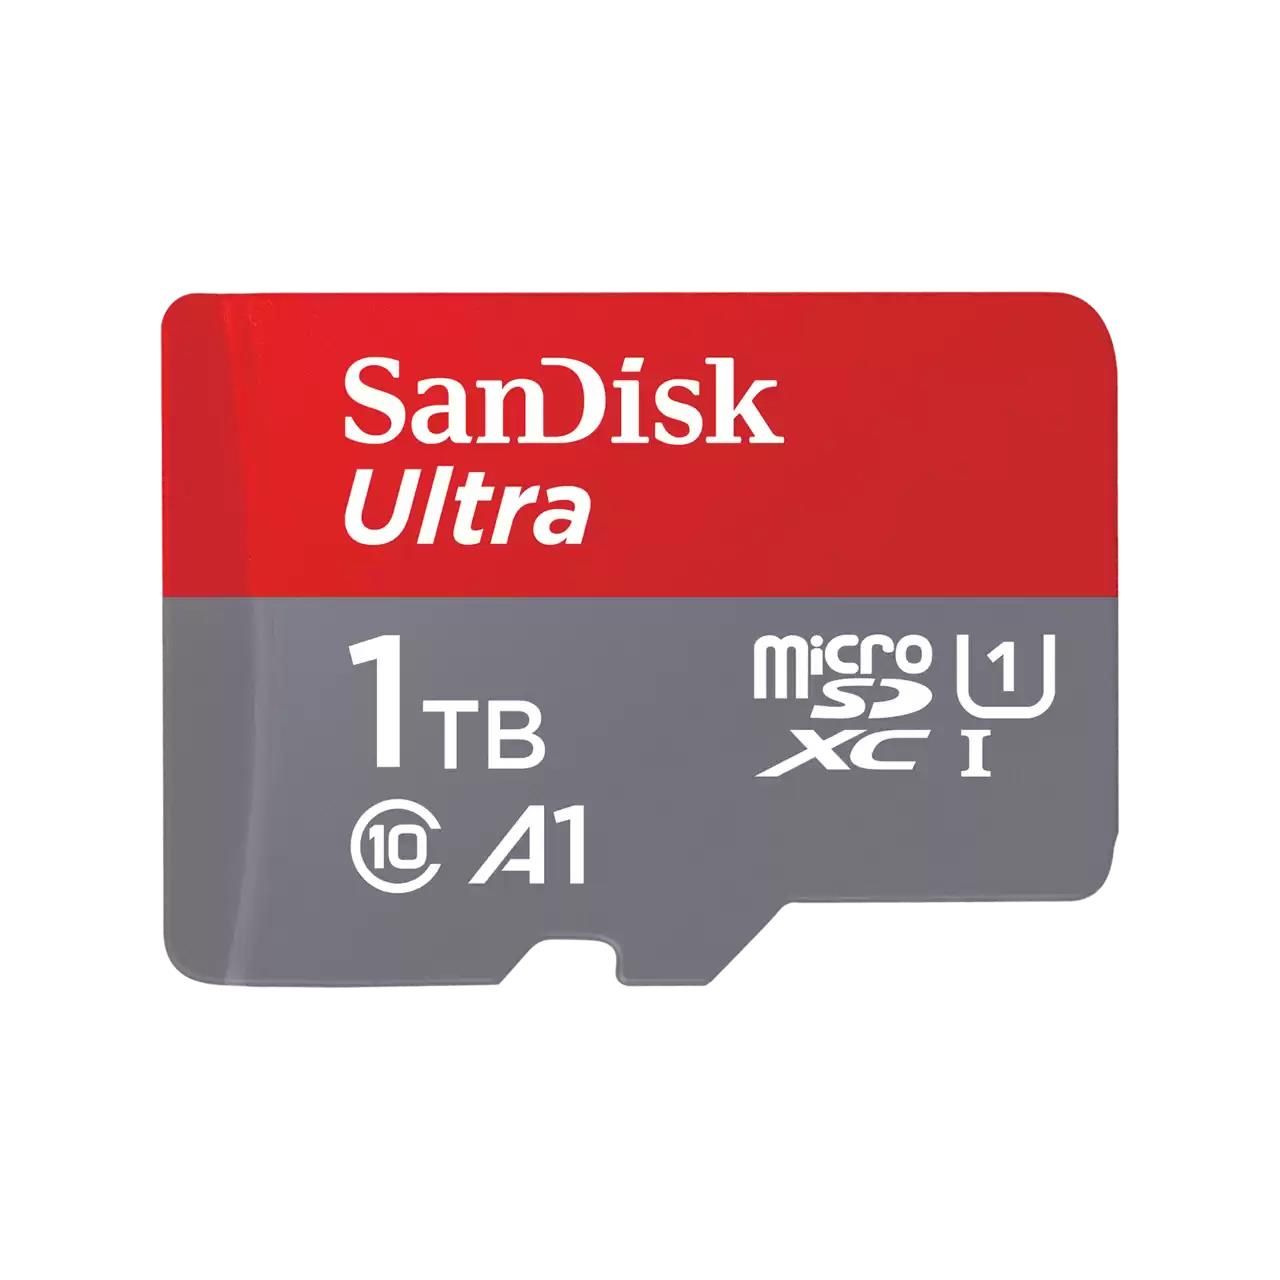 SanDisk Ultra 1Tb MicroSDXC